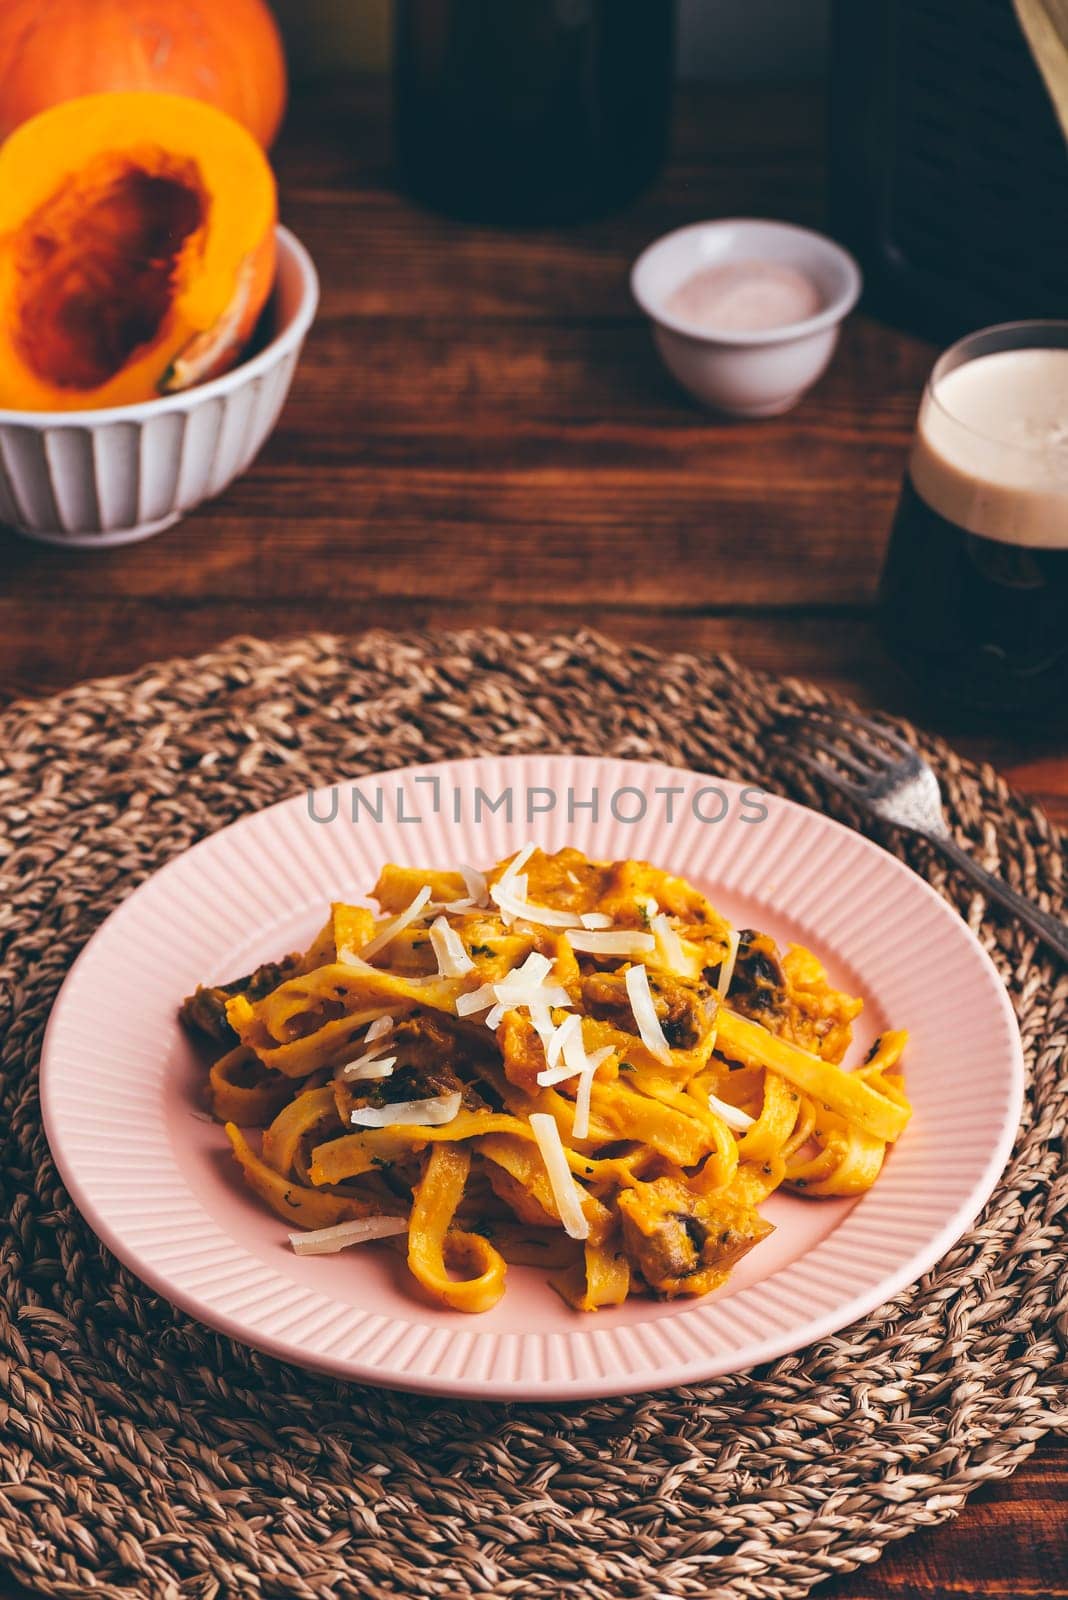 Tagliatelle Pasta with Creamy Pumpkin Sauce and Mushrooms by Seva_blsv